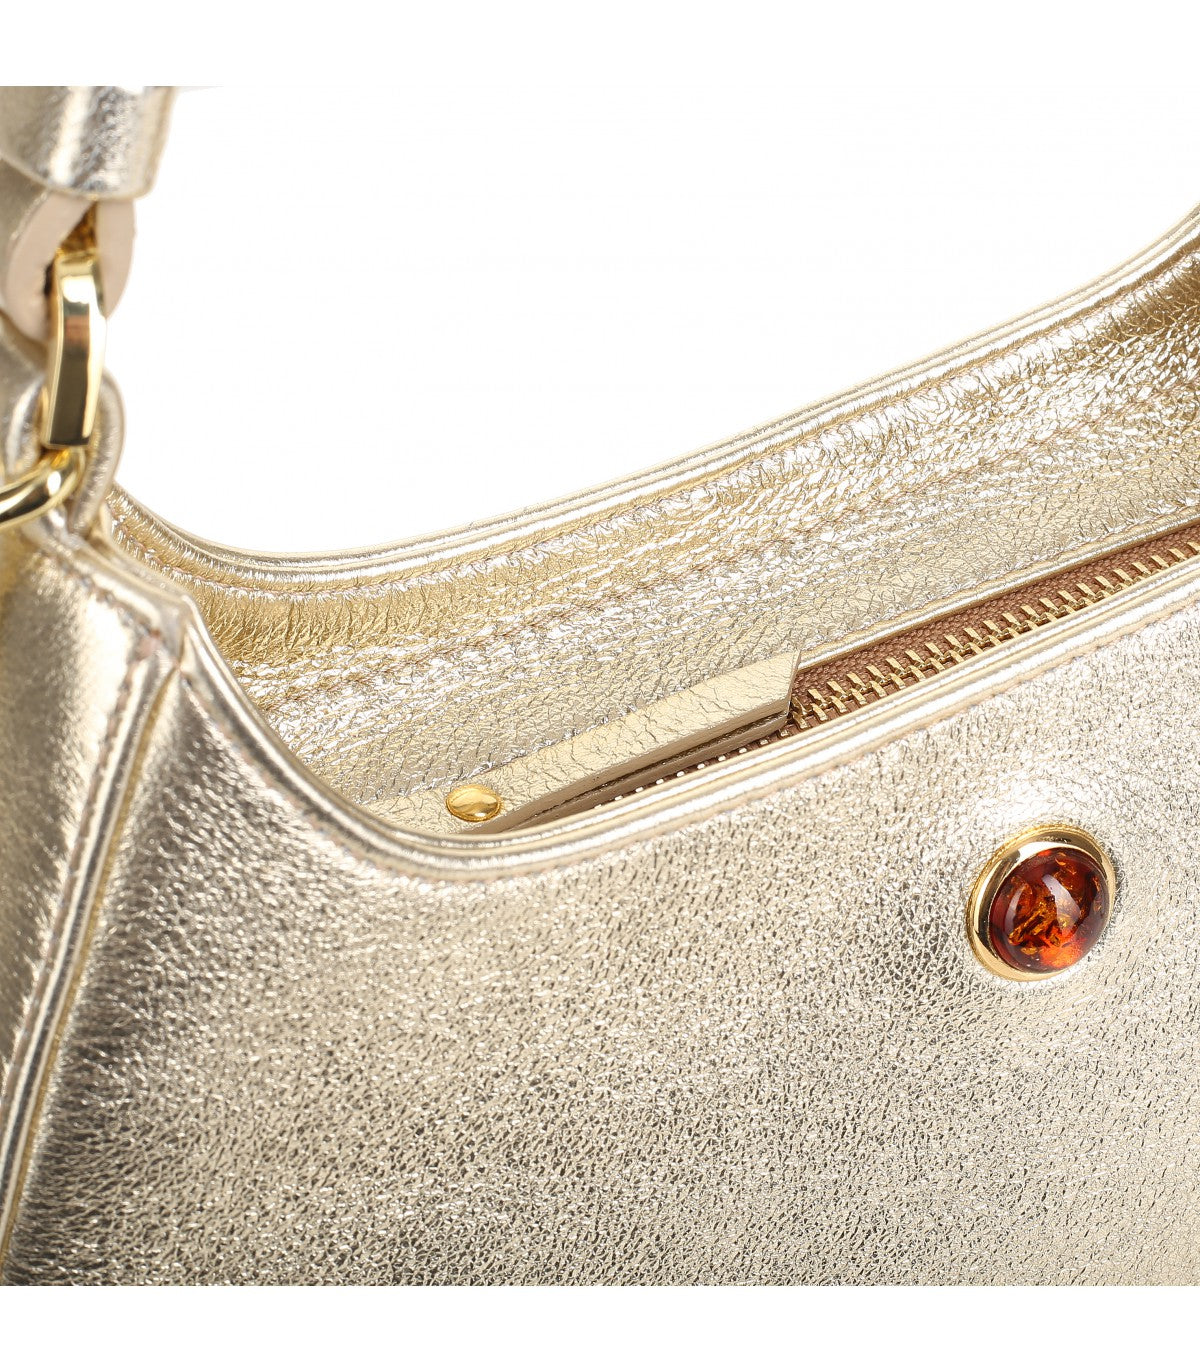 Jane Mini goldene Damenhandtasche aus Leder